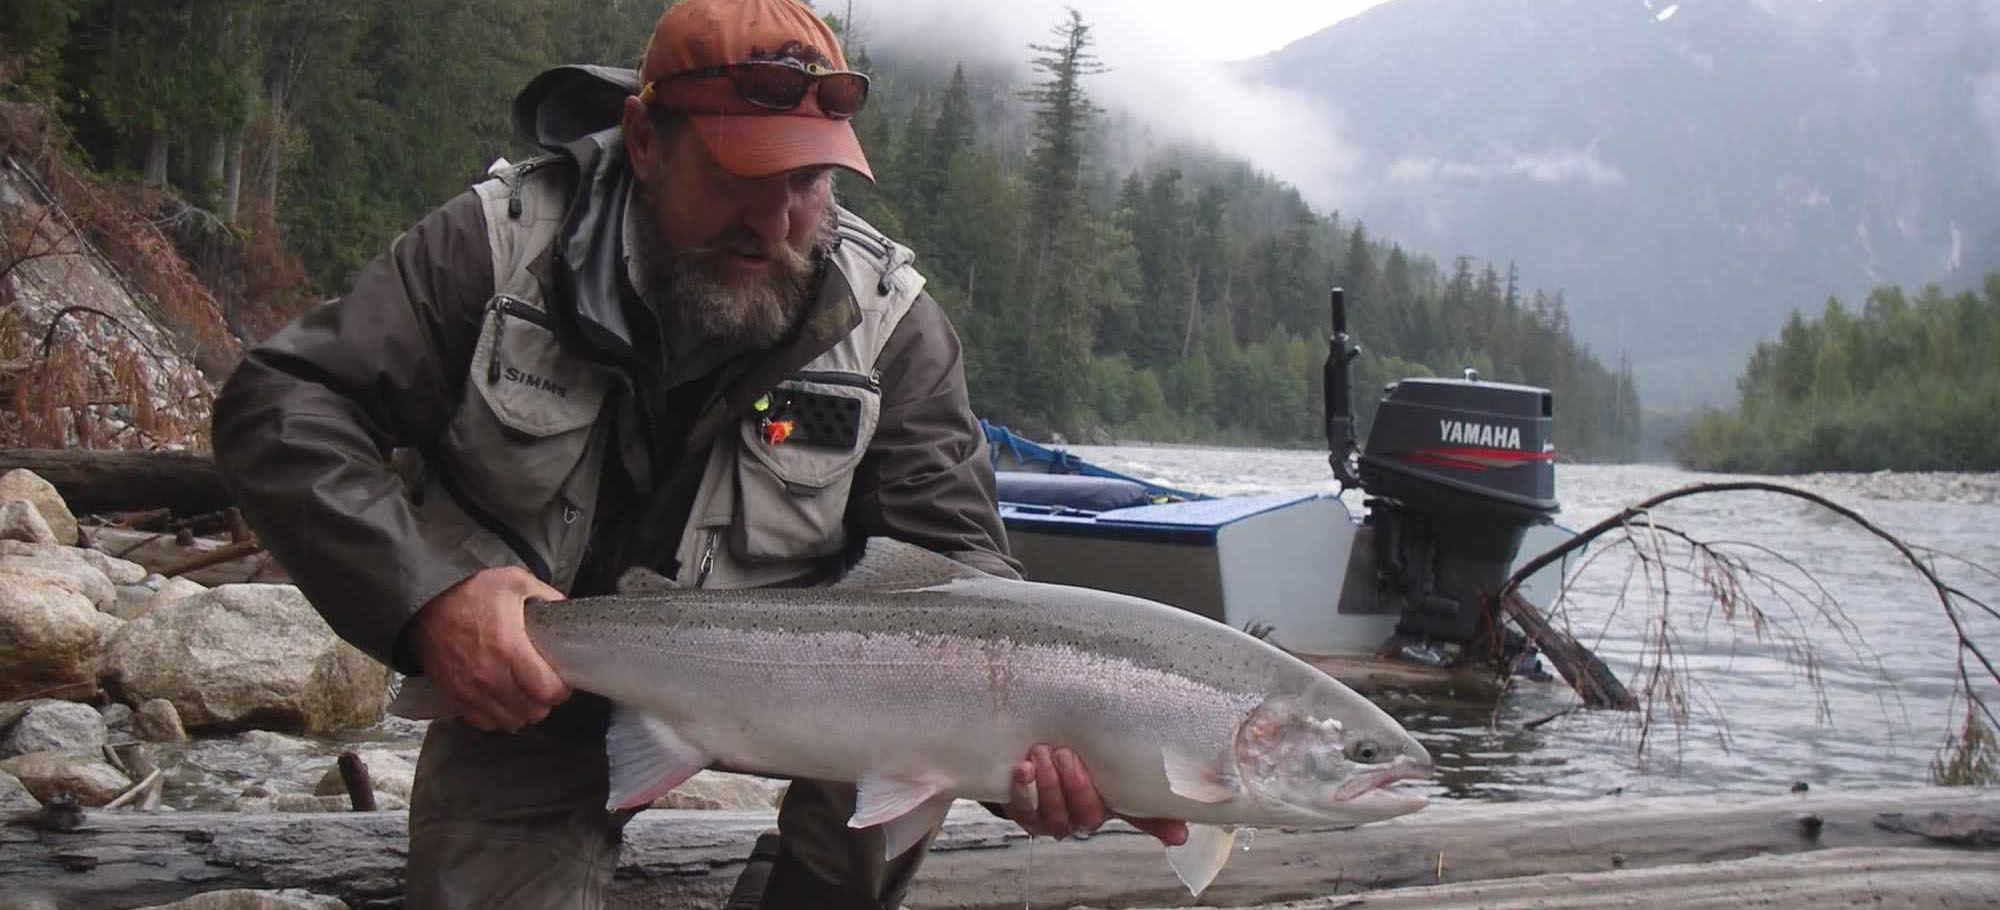 BC Steelhead Fishing - Steelhead Lodges & Camps - The Top Rivers in BC